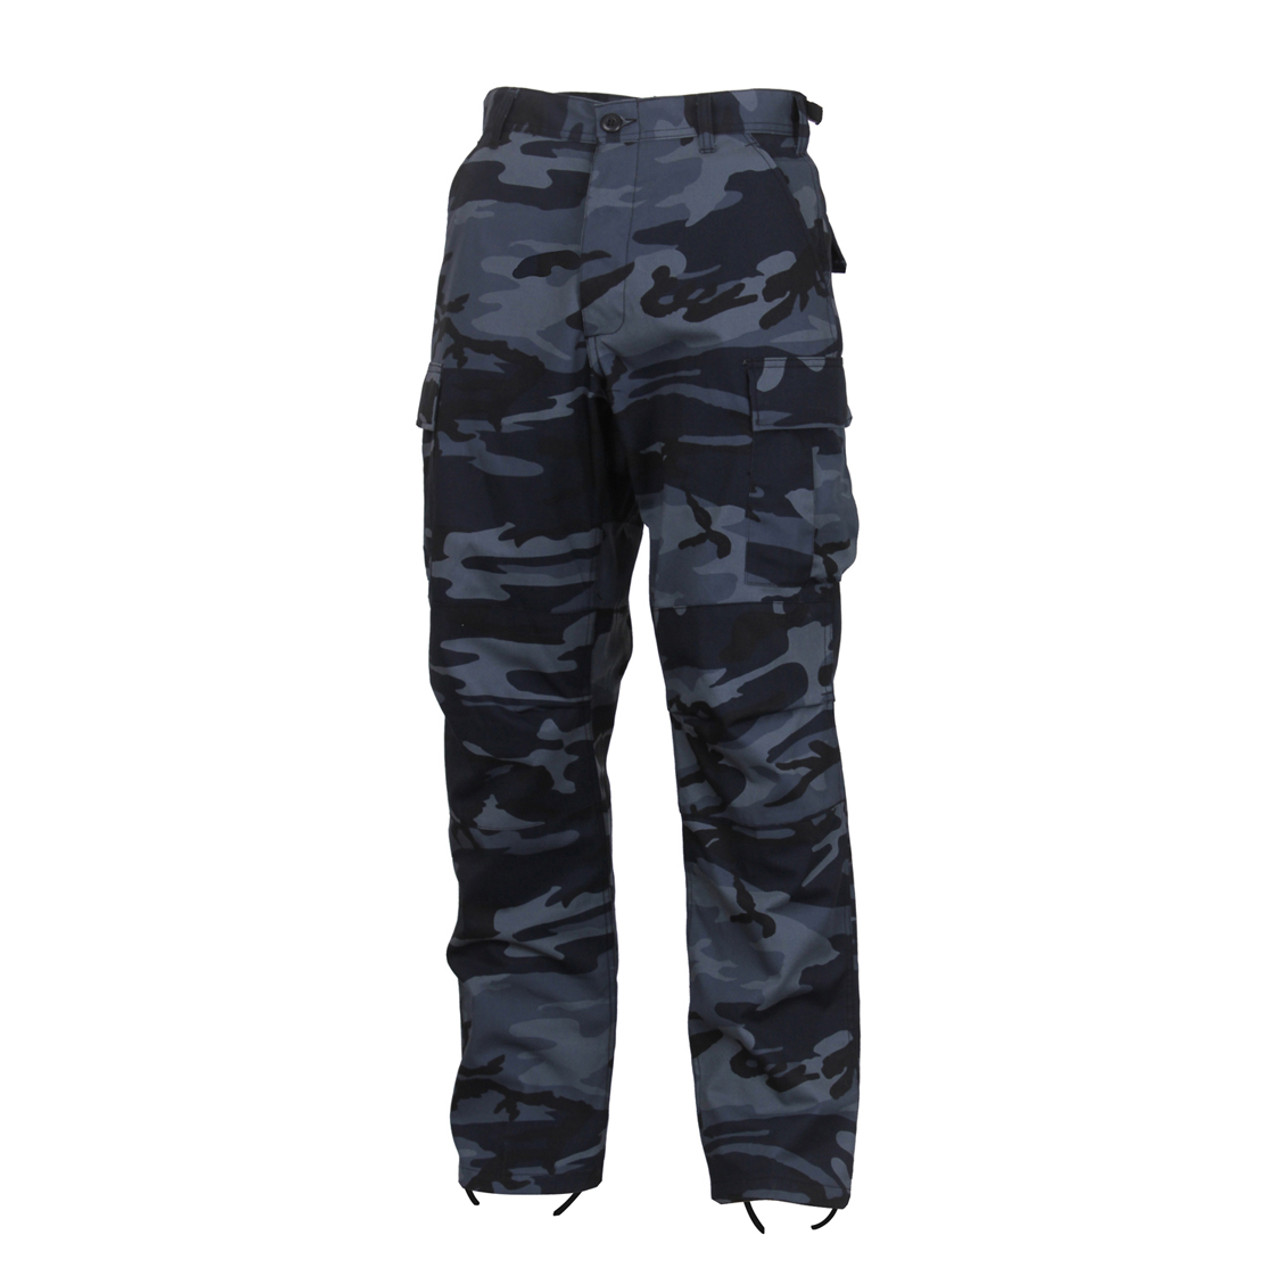 Shop Sky Blue Camo BDU Pants - Fatigues Army Navy Gear